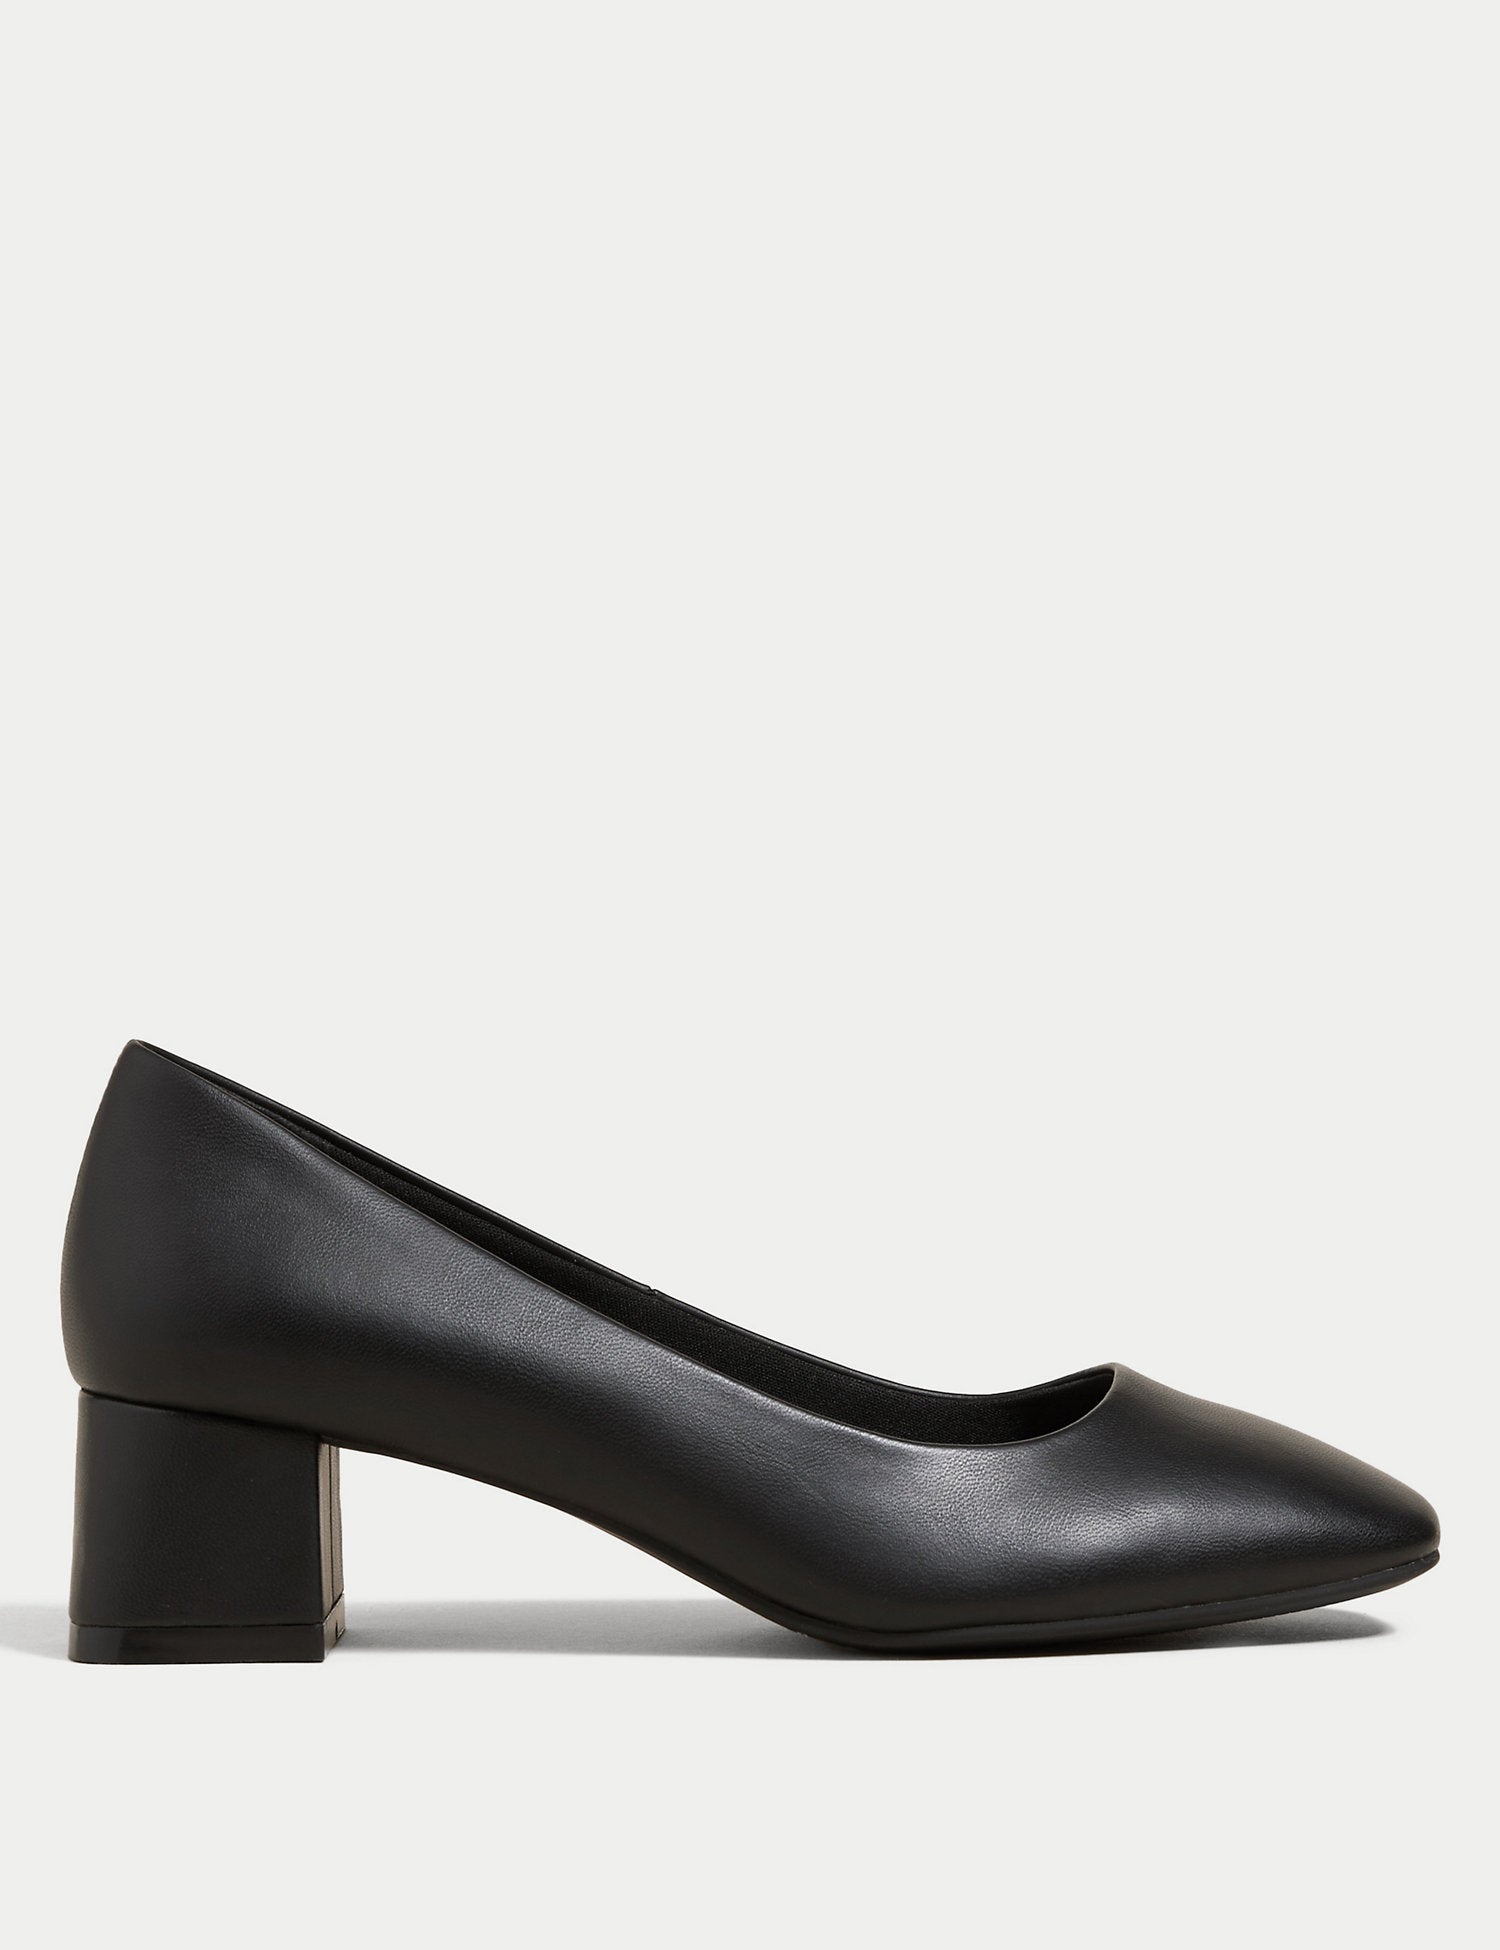 block heels 1.8 inches block heels black fashion shoes school shoes |  Shopee Philippines